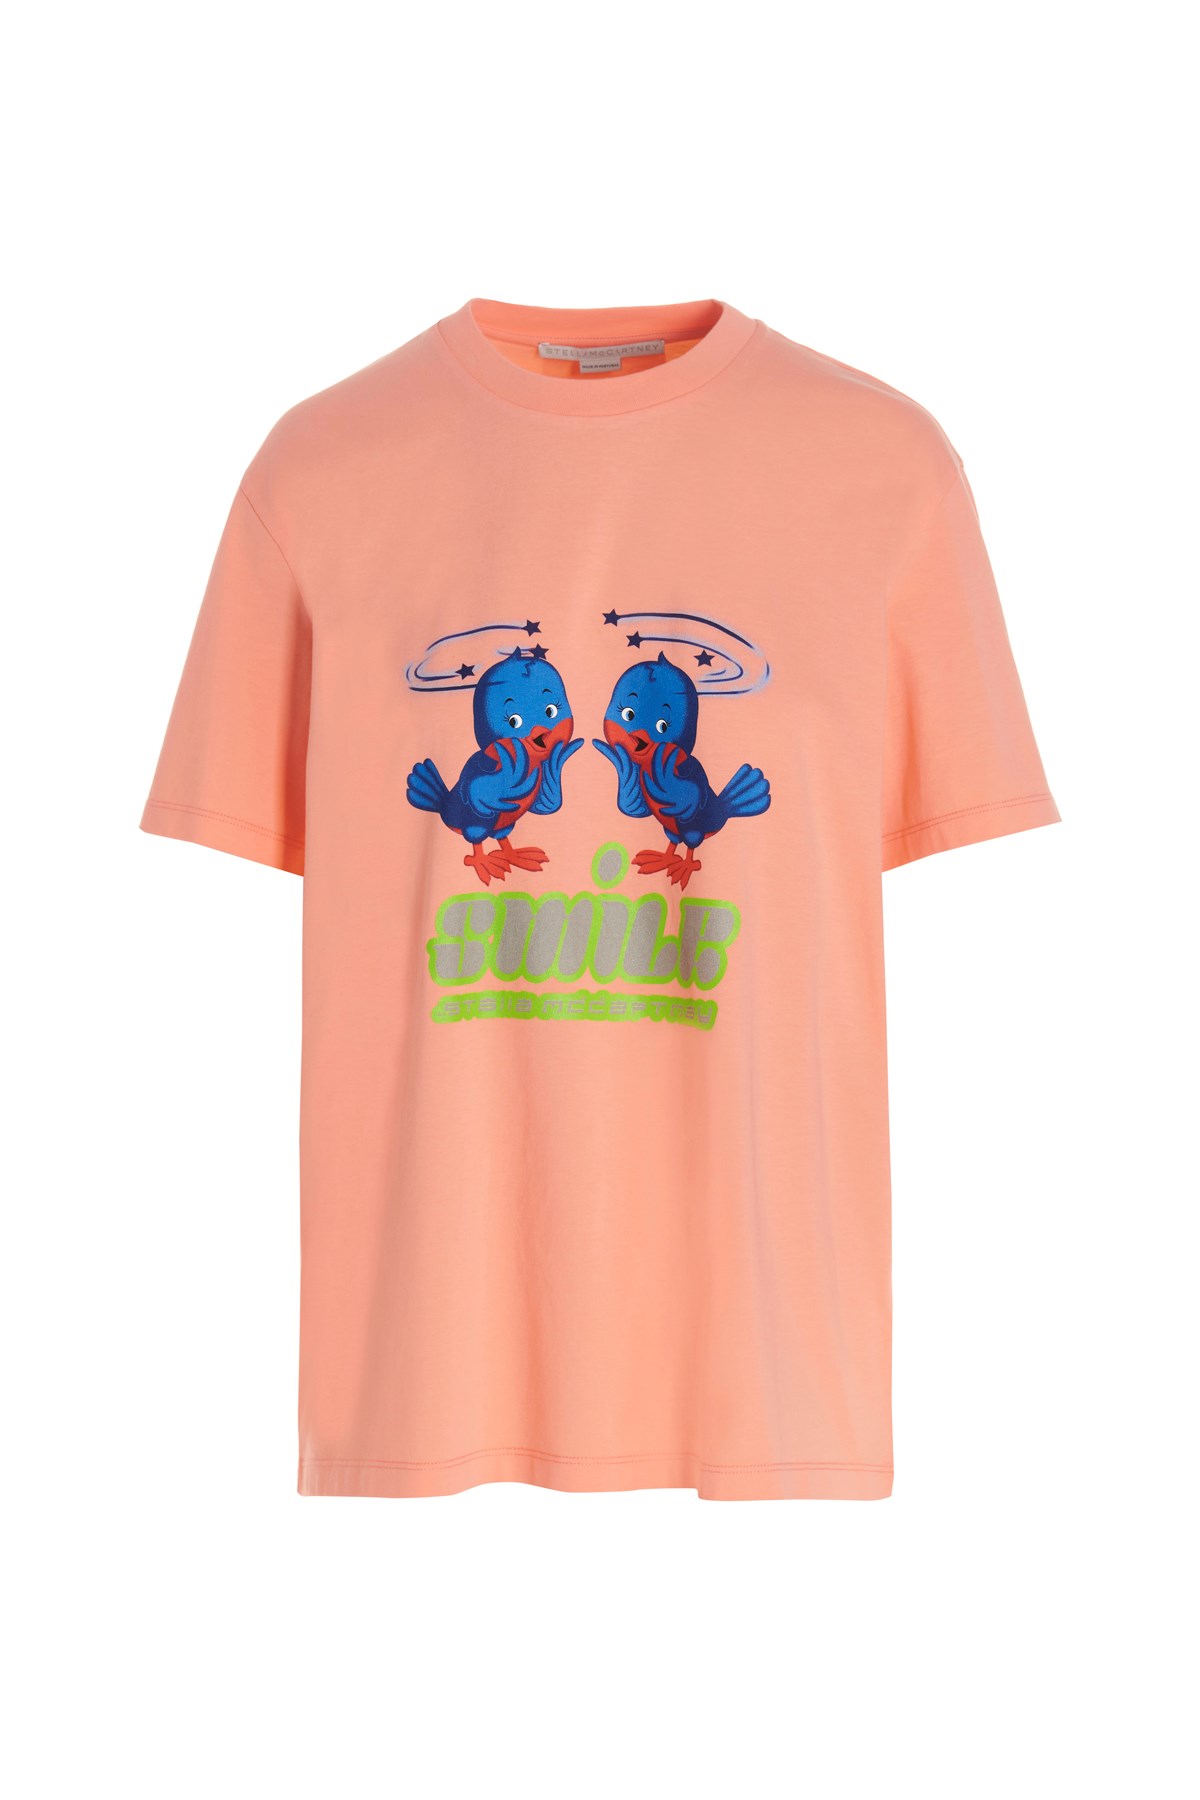 STELLA MCCARTNEY 'Kitsch Bird' T-Shirt